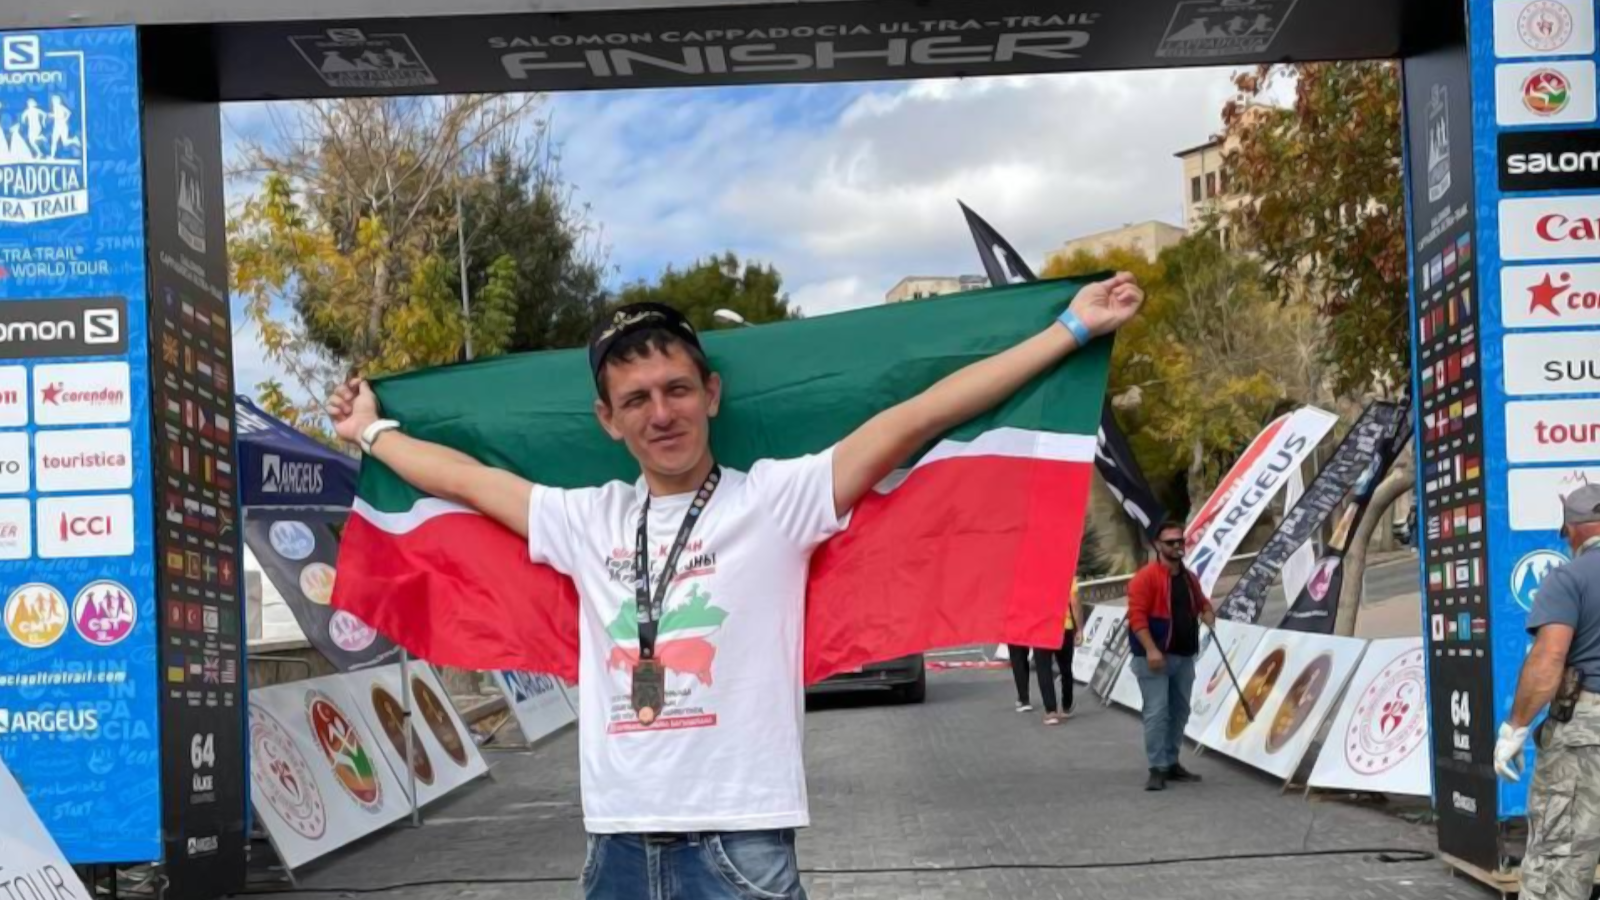 700-kilometer ultramarathon in support of the Tatar language